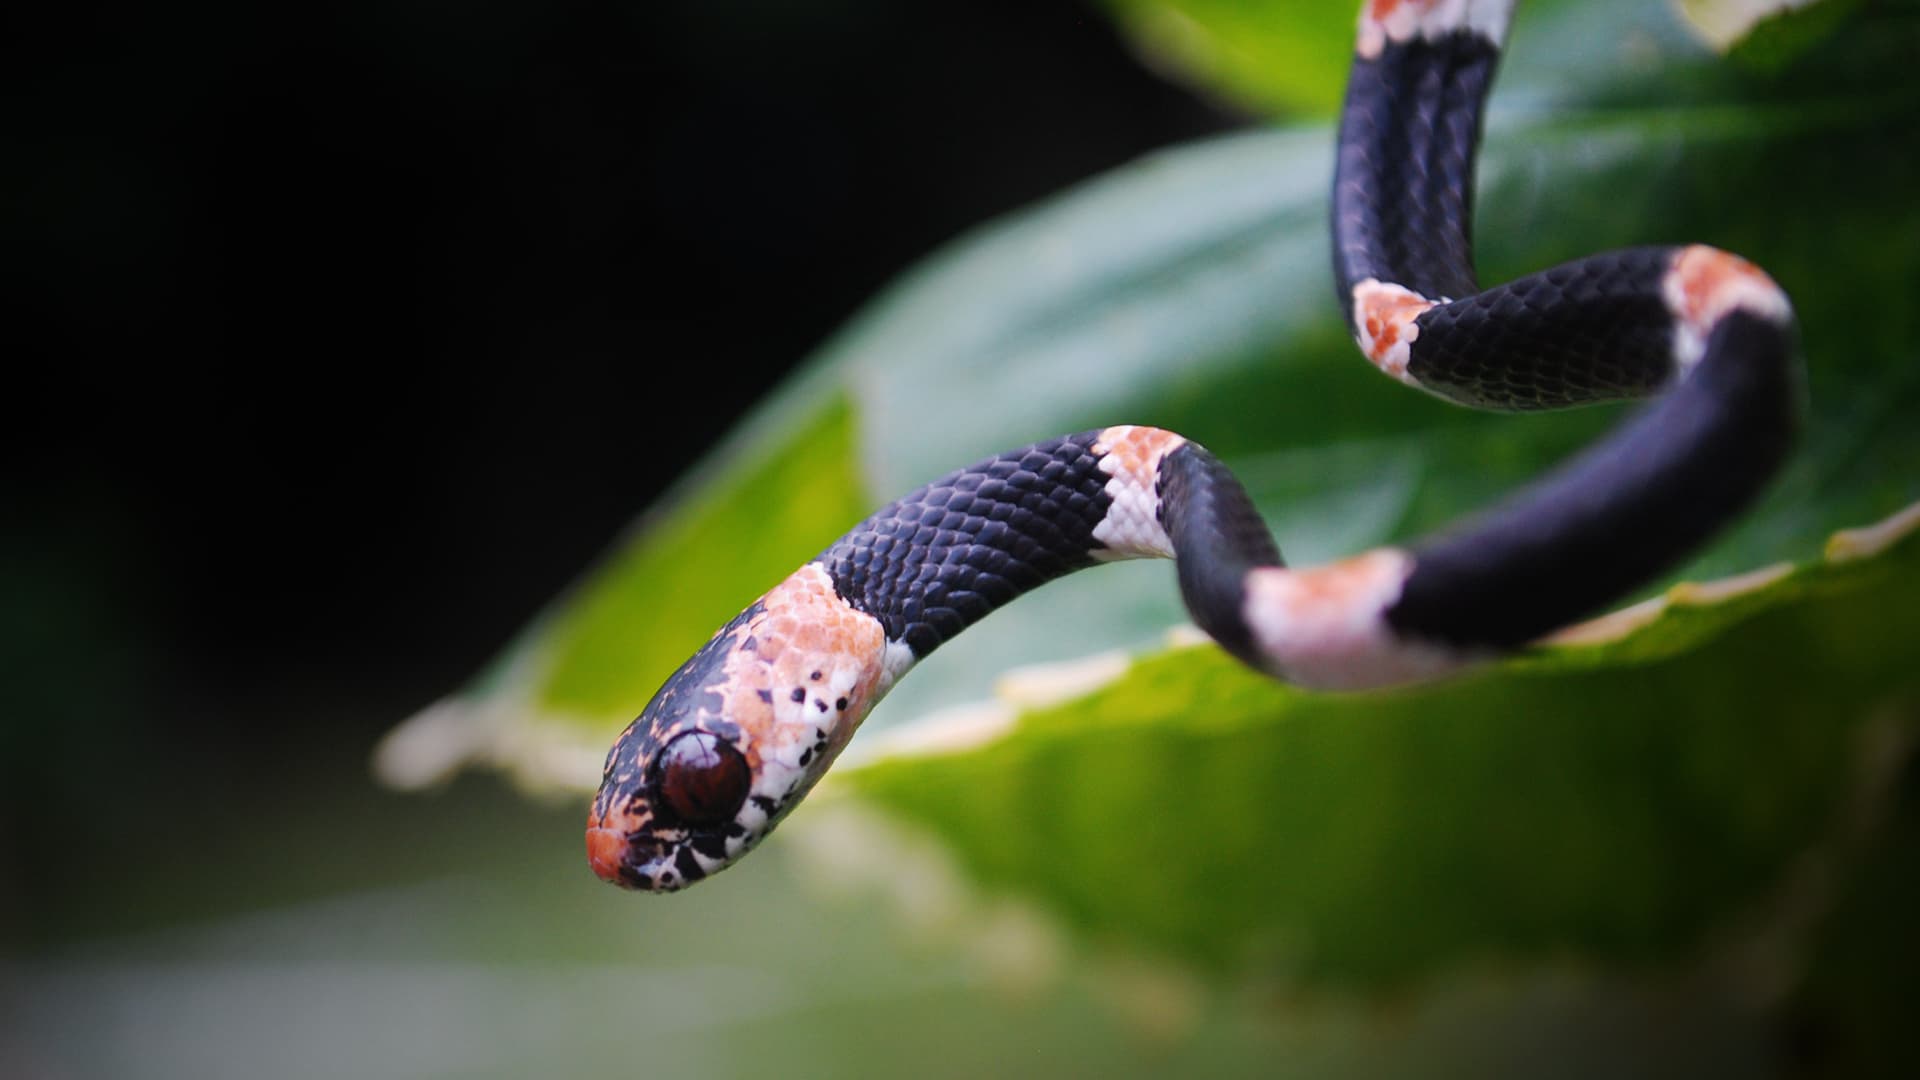 Black and orange striped snake